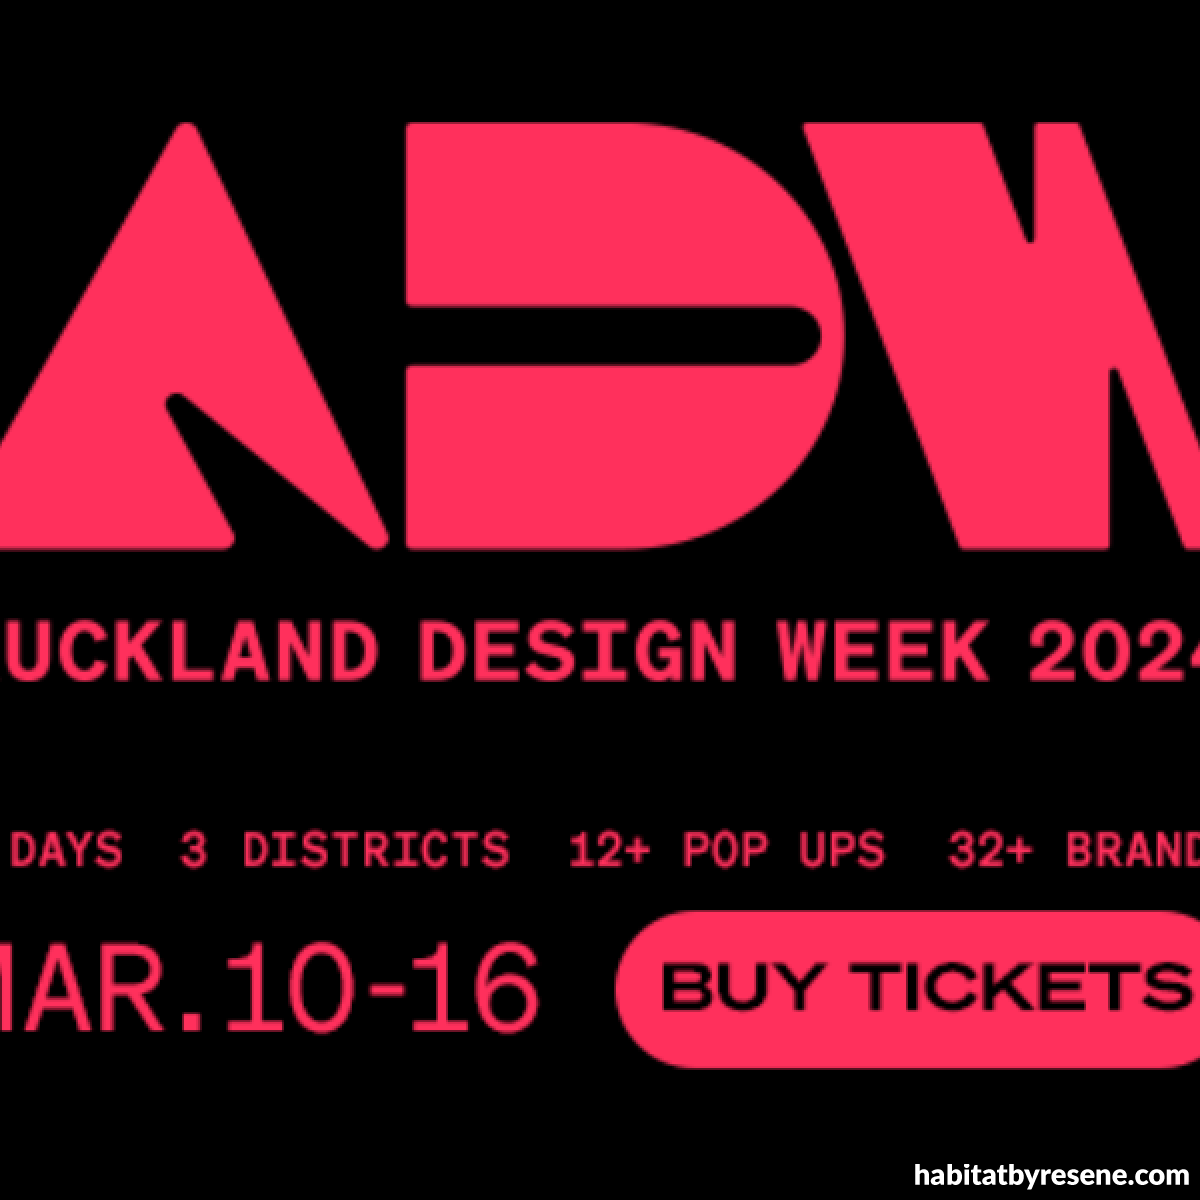 Get your tickets to Auckland Design Week 2024! Habitat by Resene